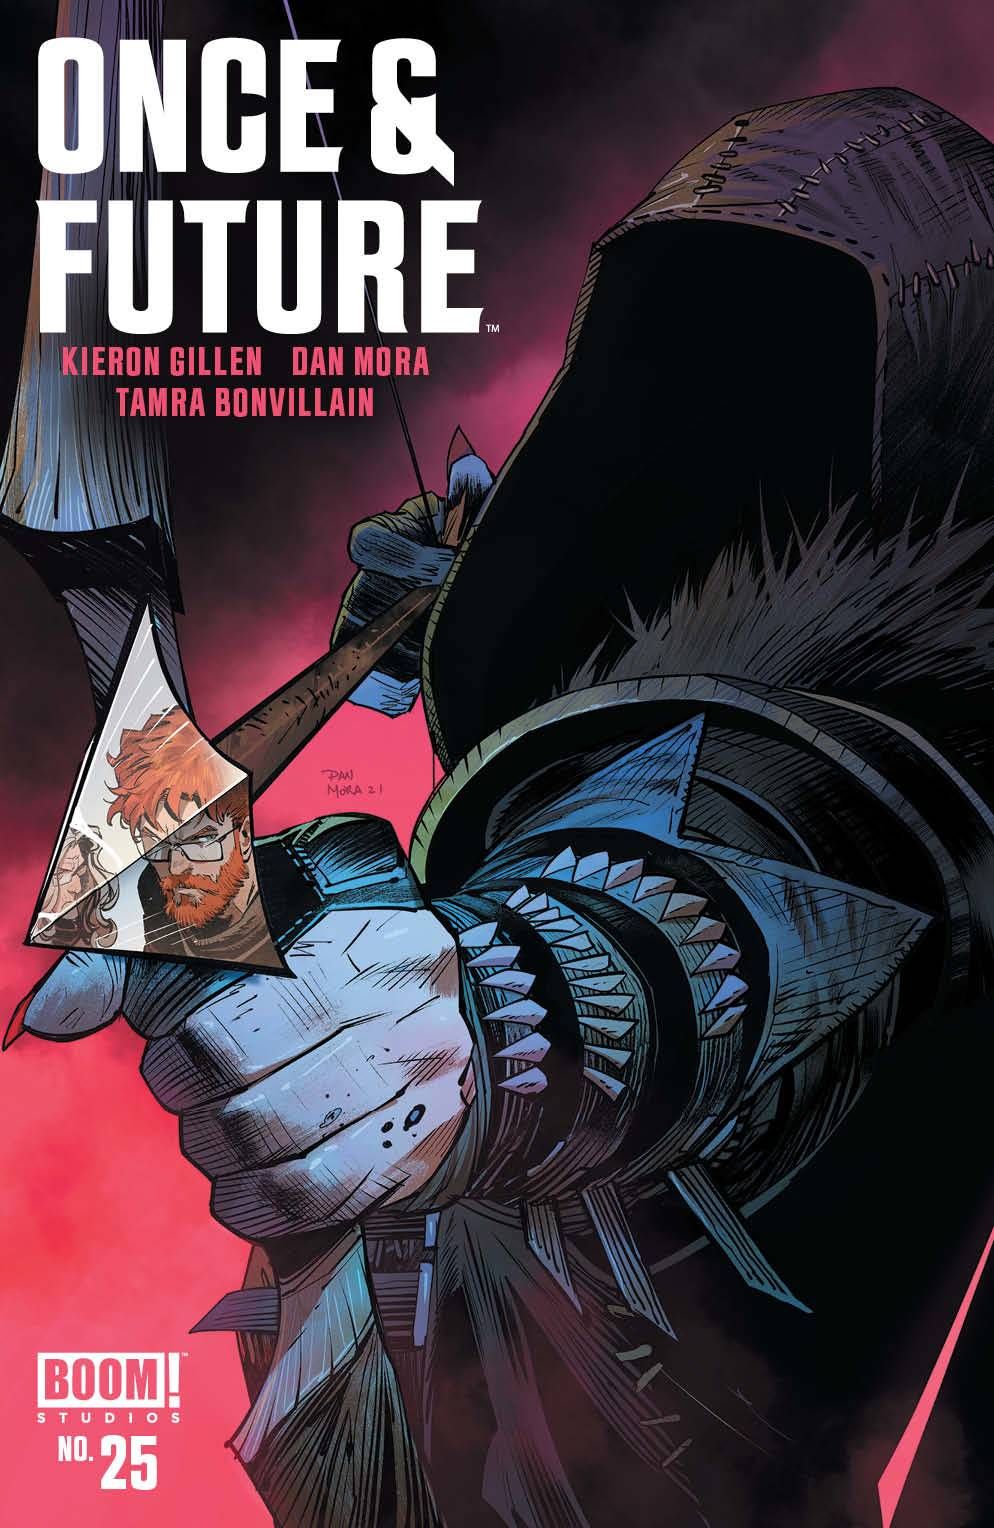 Once & Future #25 Comic